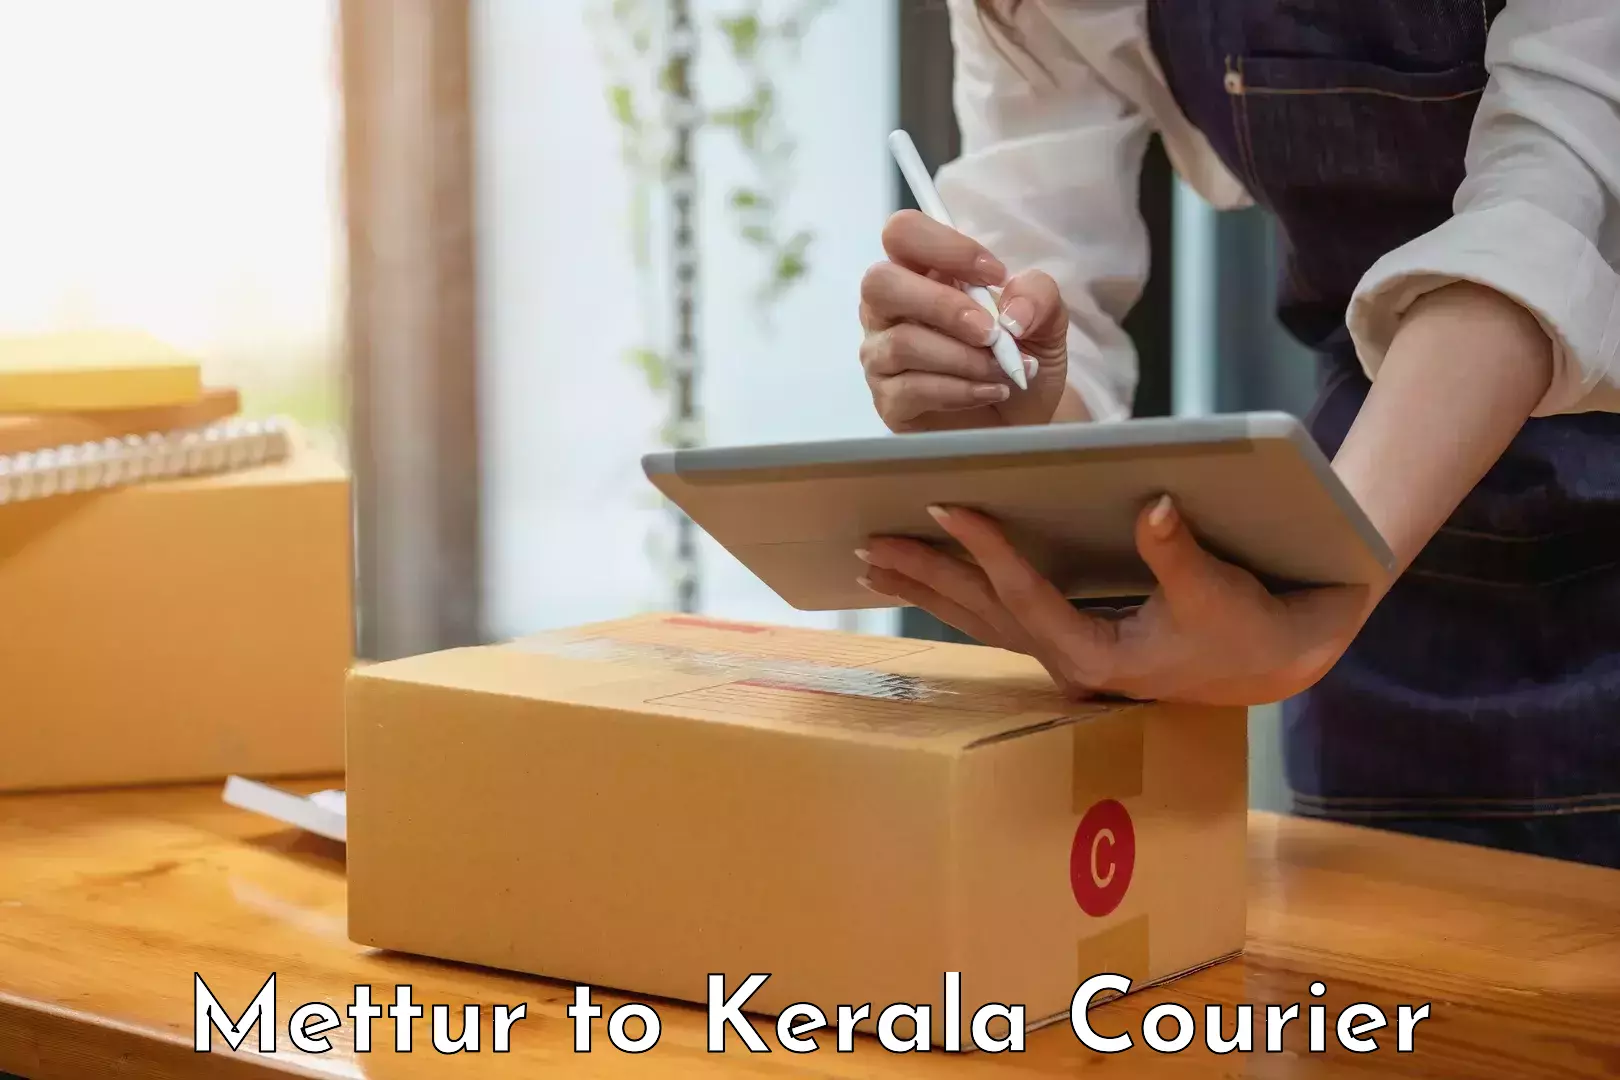 Flexible delivery scheduling Mettur to Kochi